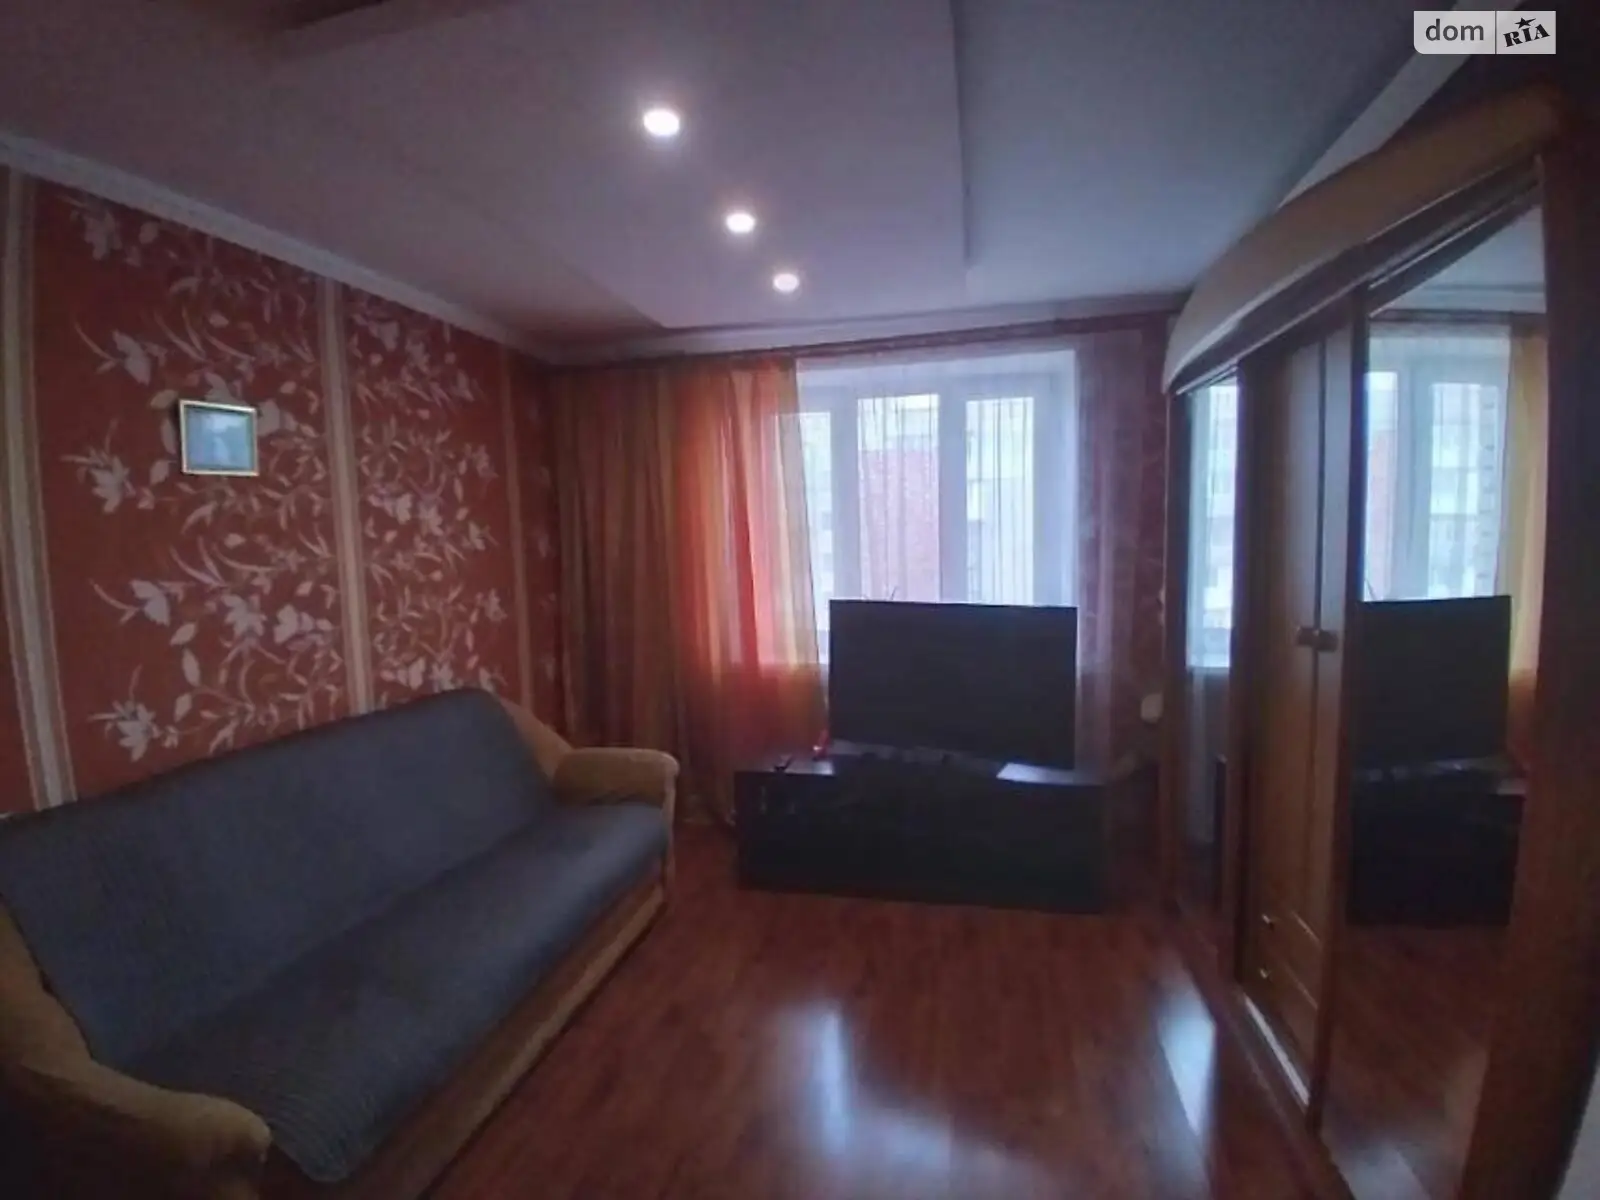 Продается комната 13 кв. м в Черноморске, цена: 16800 $ - фото 1